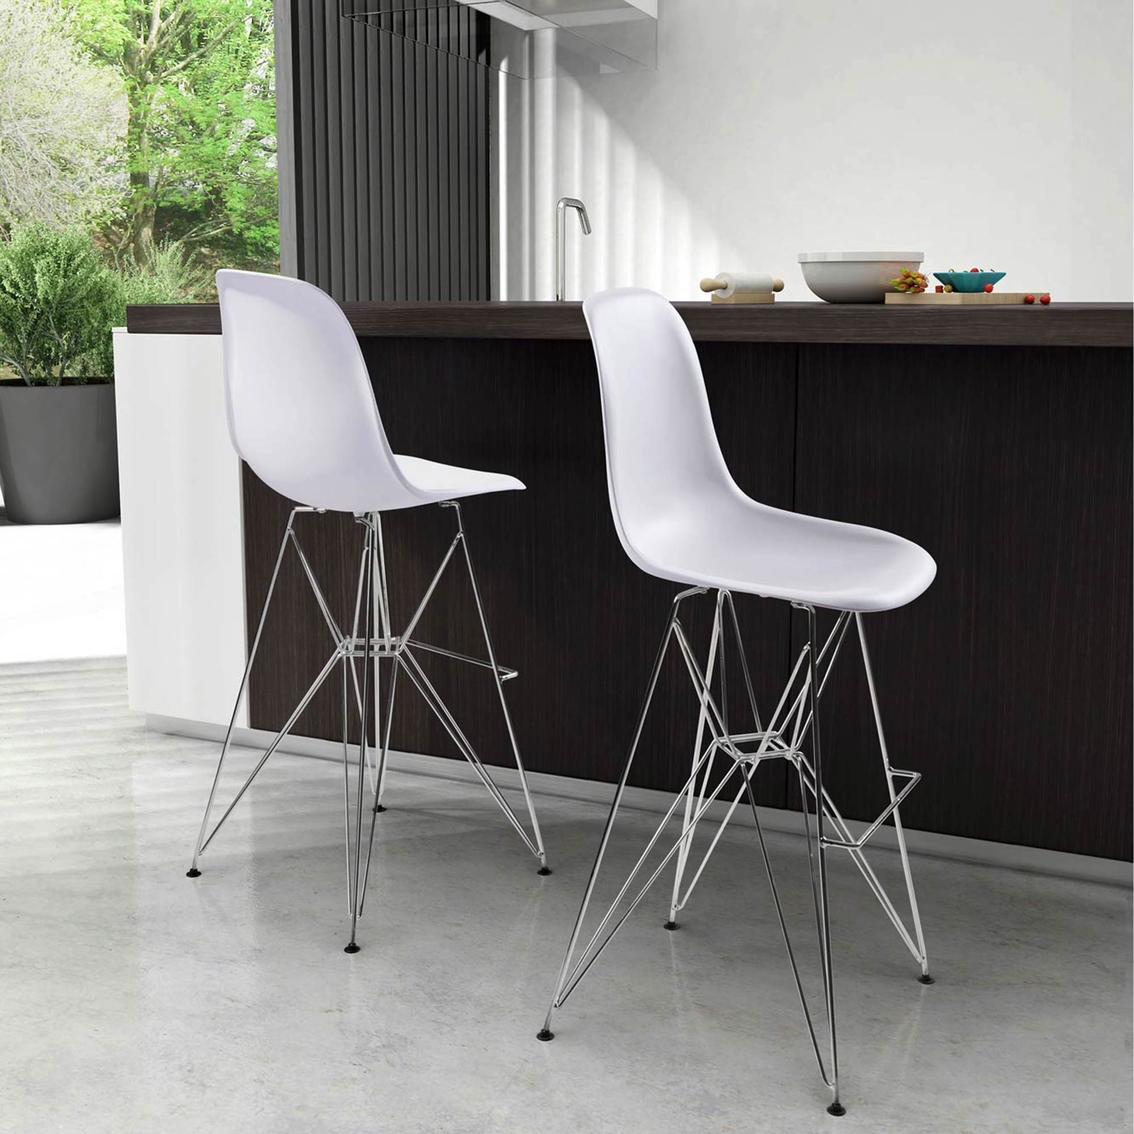 Zuo Modern Zip Bar Chair - Image 4 of 4